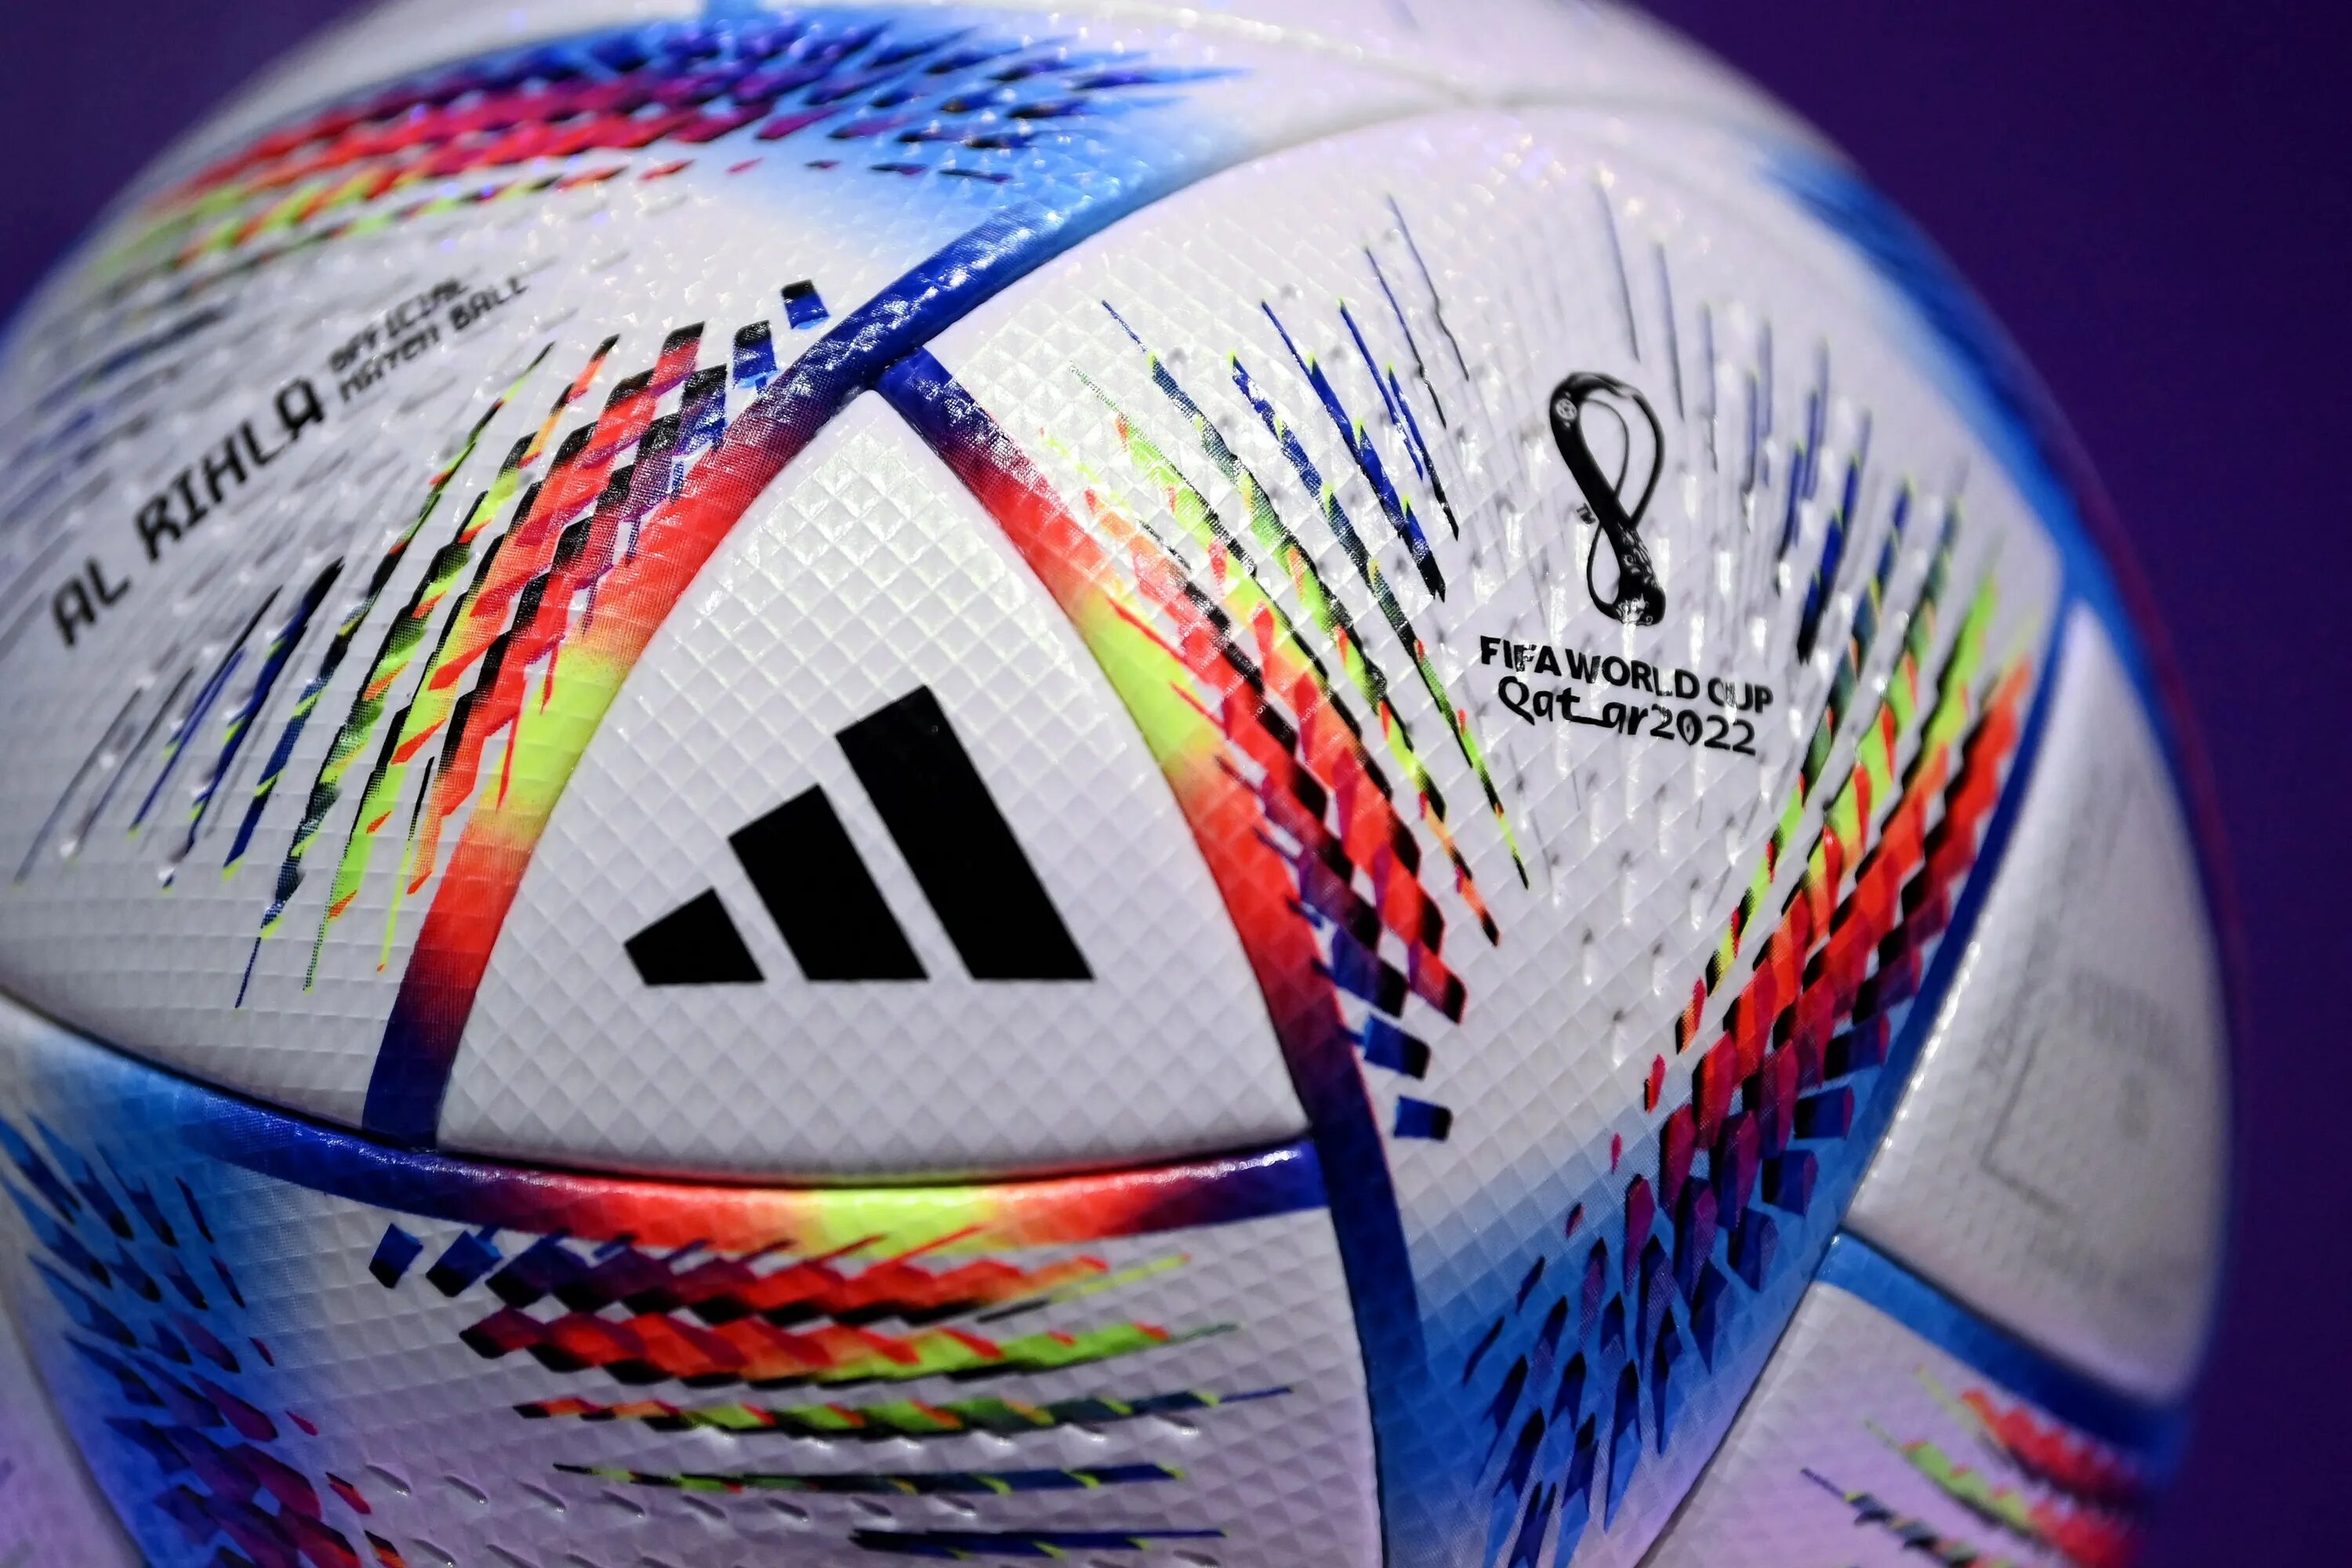 Adidas FIFA 2022 Ball. Adidas World Cup 2022. Мяч adidas FIFA World Cup 2022 al Rihla. Adidas 2022 World Cup Rihla Official Match Ball.